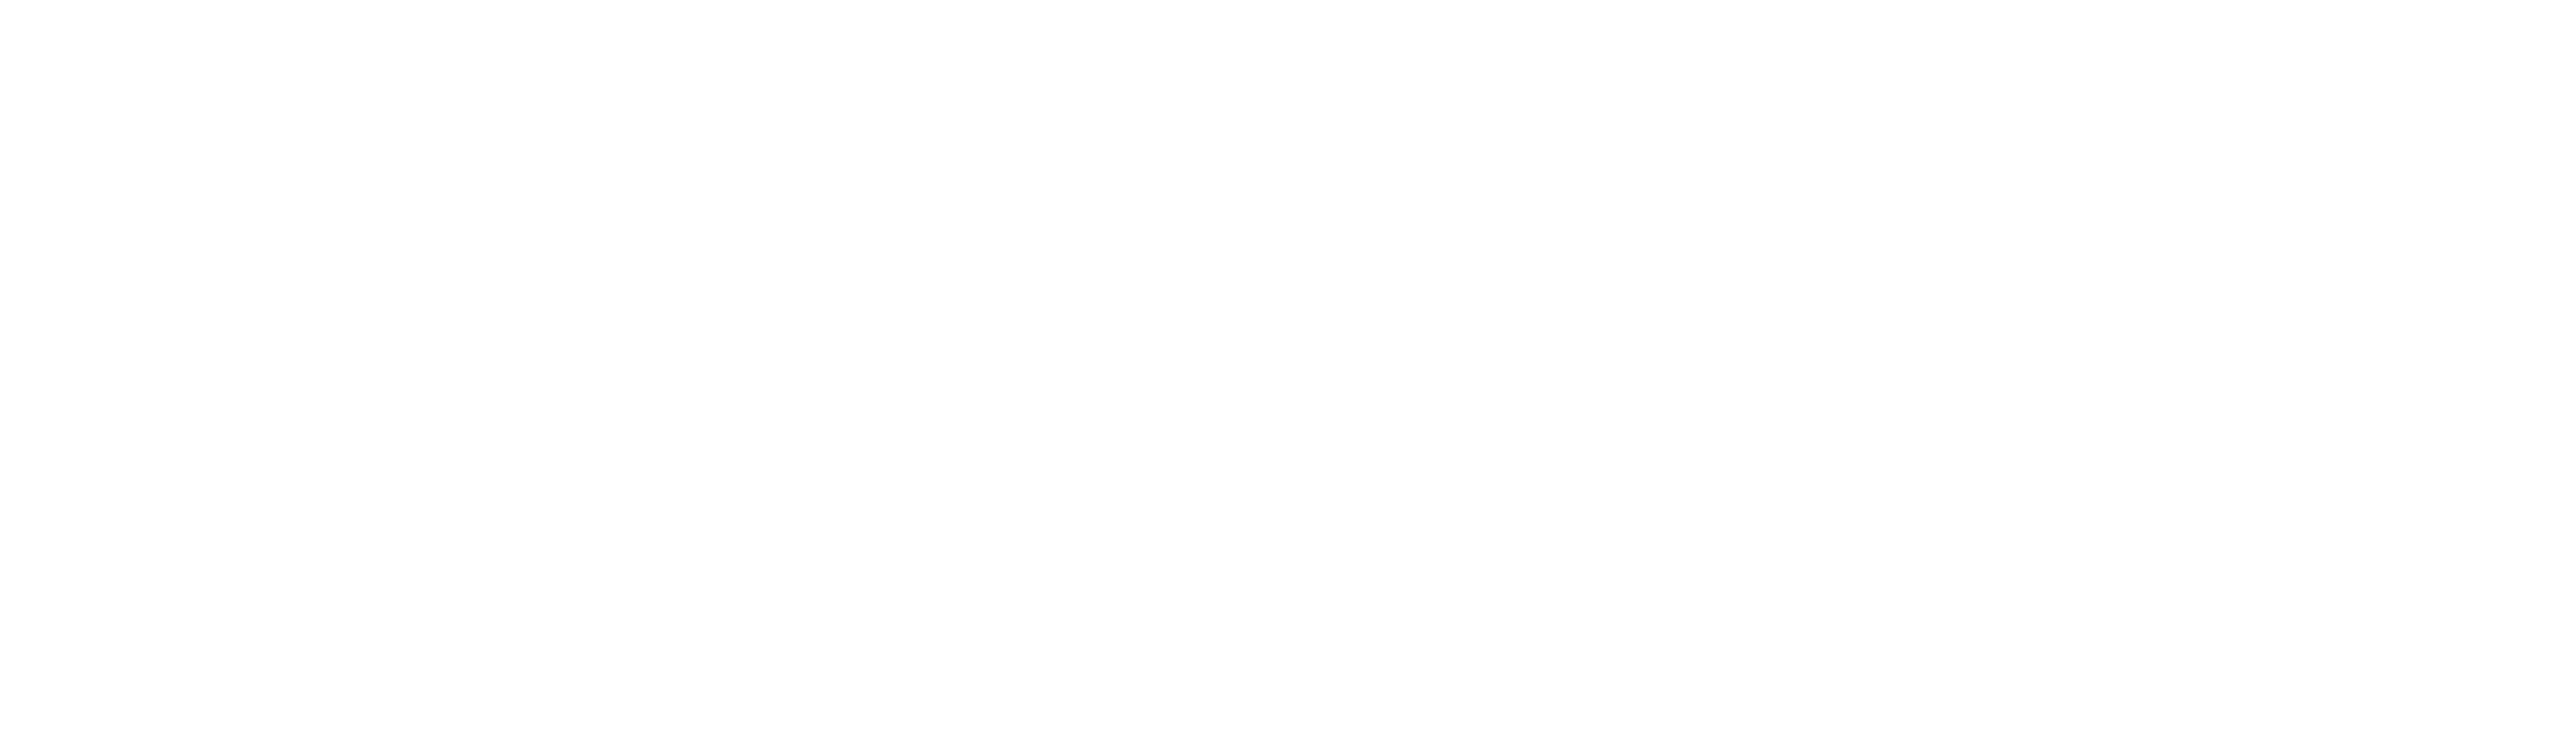 BBC_logo_white